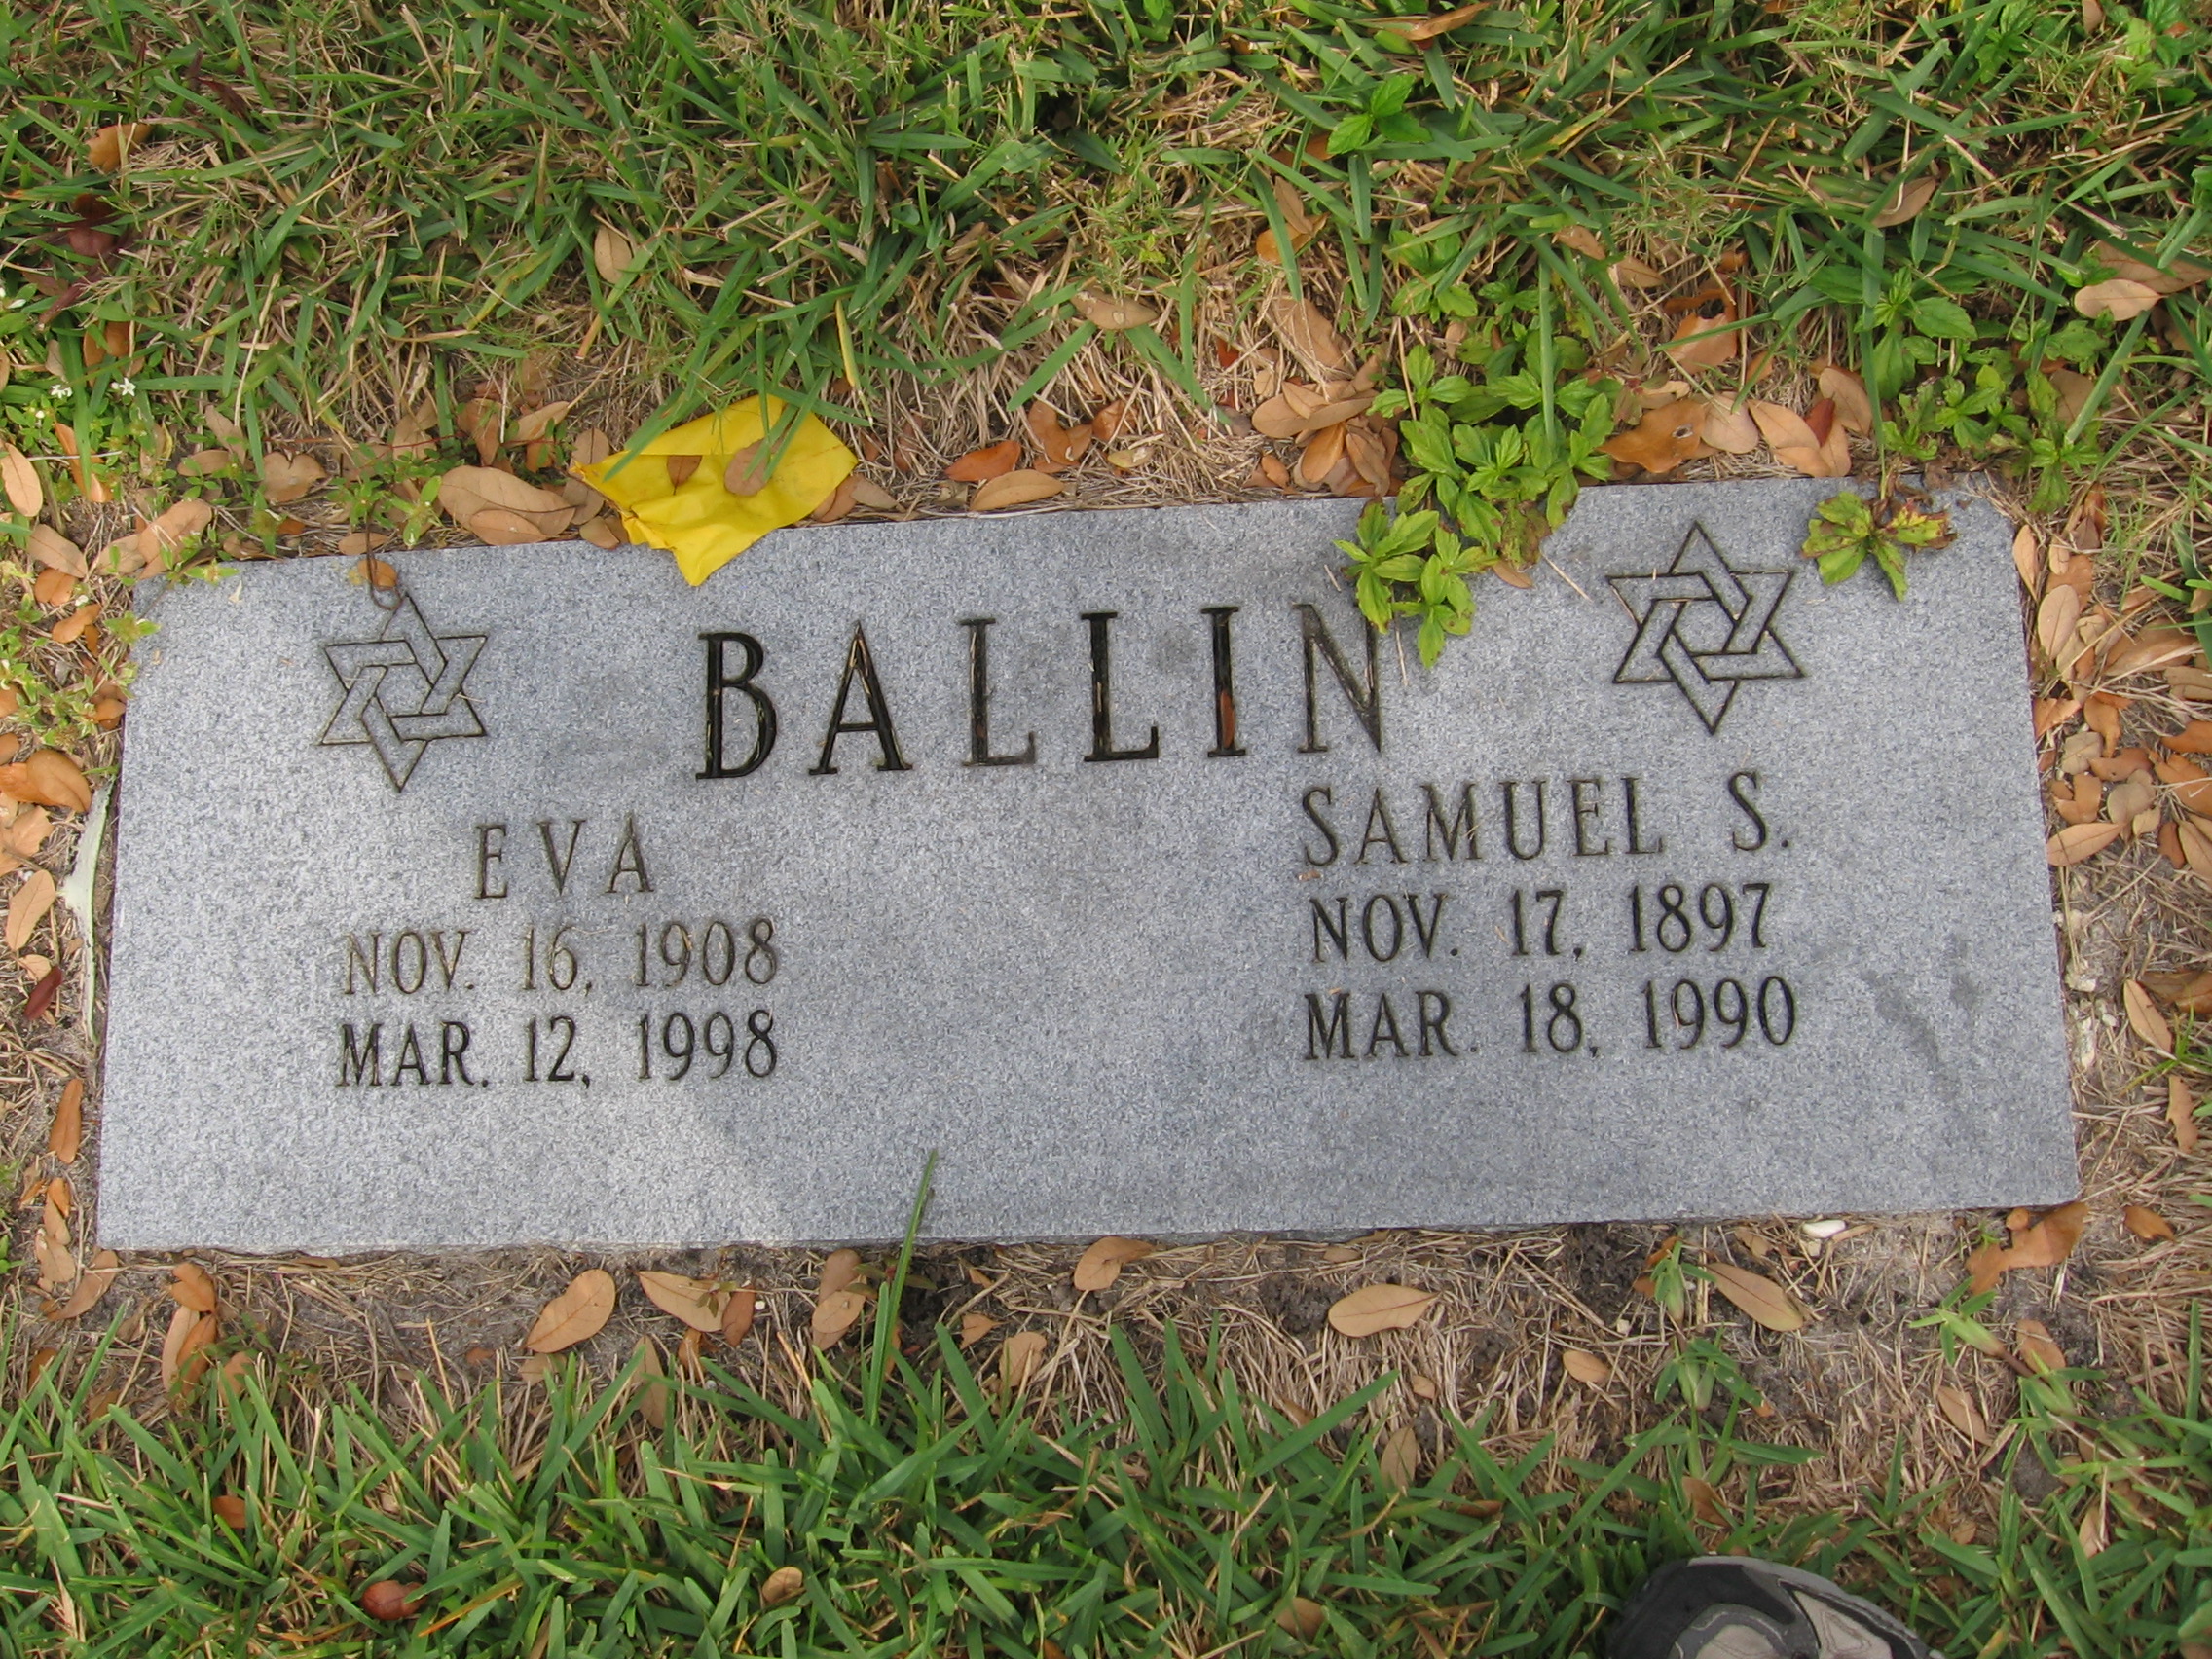 Samuel S Ballin